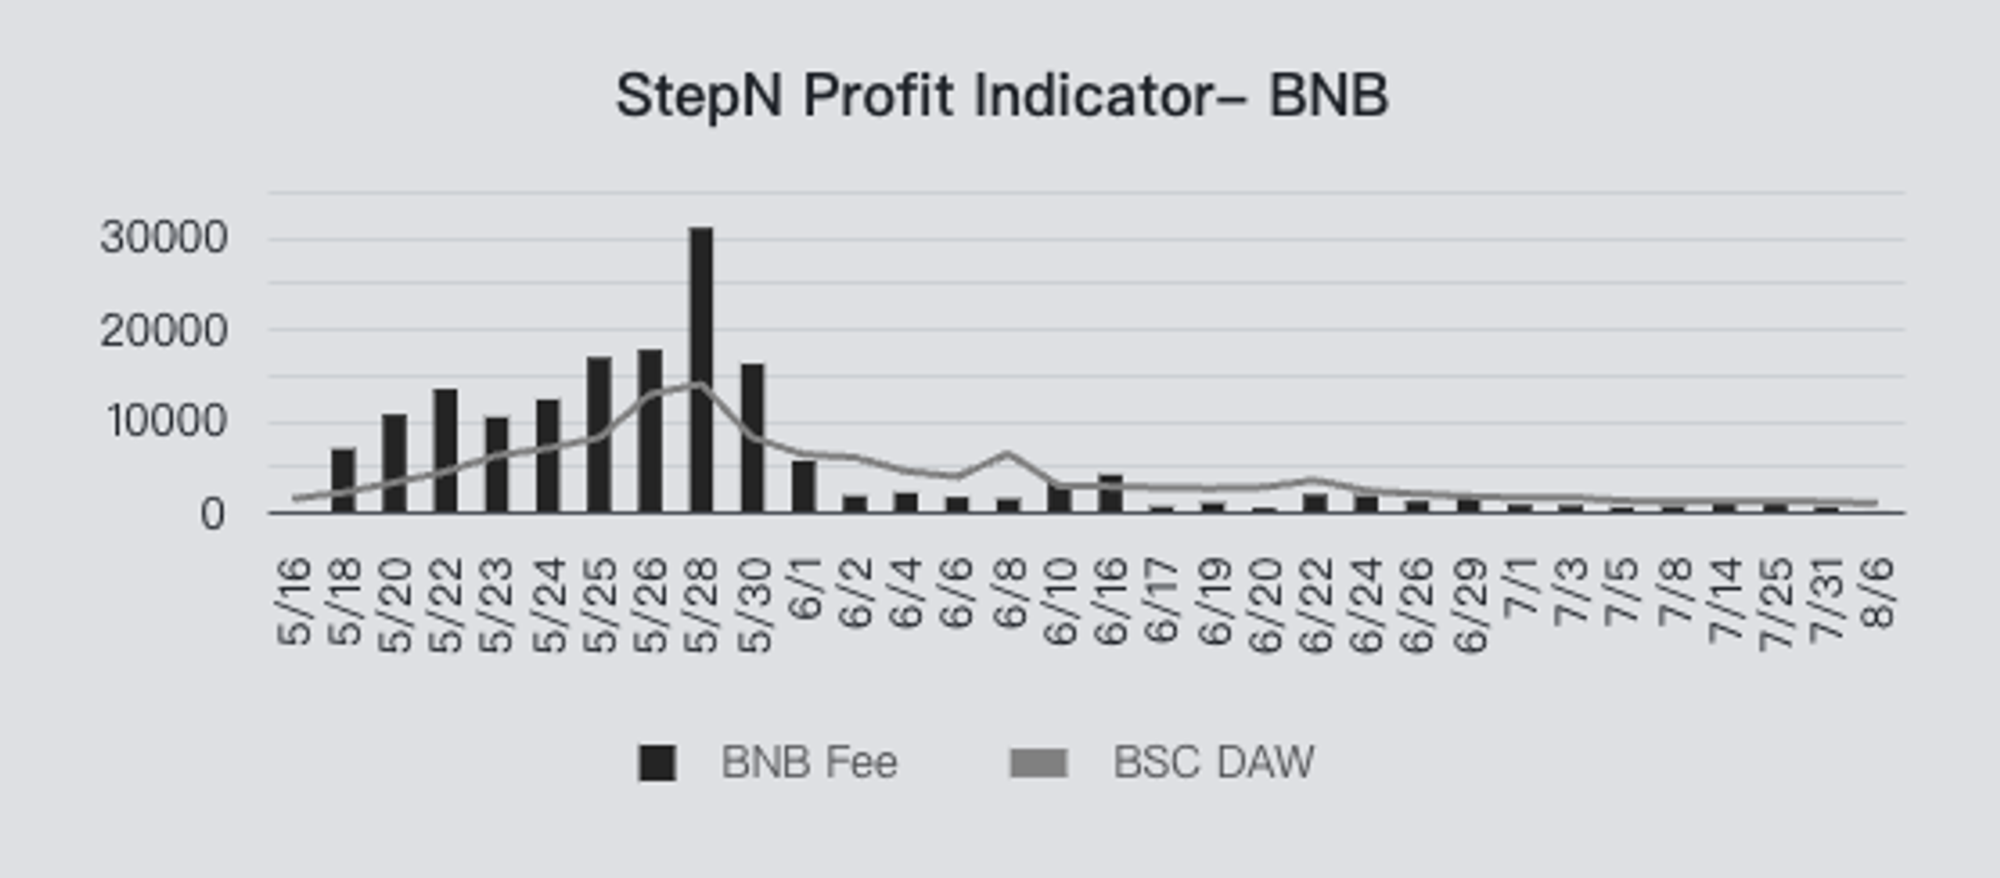 Stepn Profit Indicator - BNB